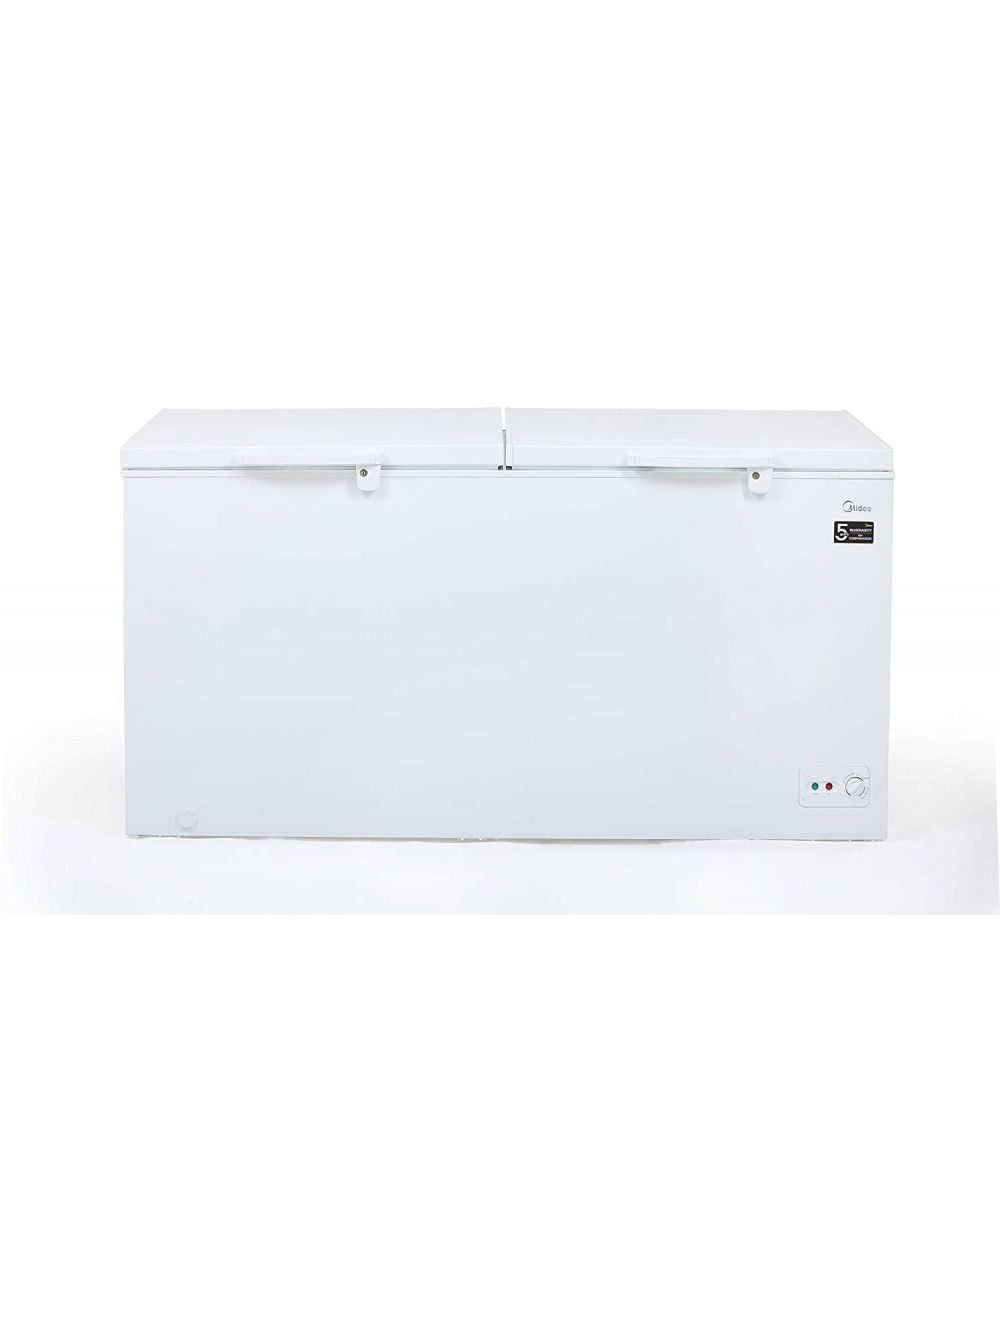 Midea  Chest Freezer White Color 512 Ltr Gross Capacity 2 Door-HD670C